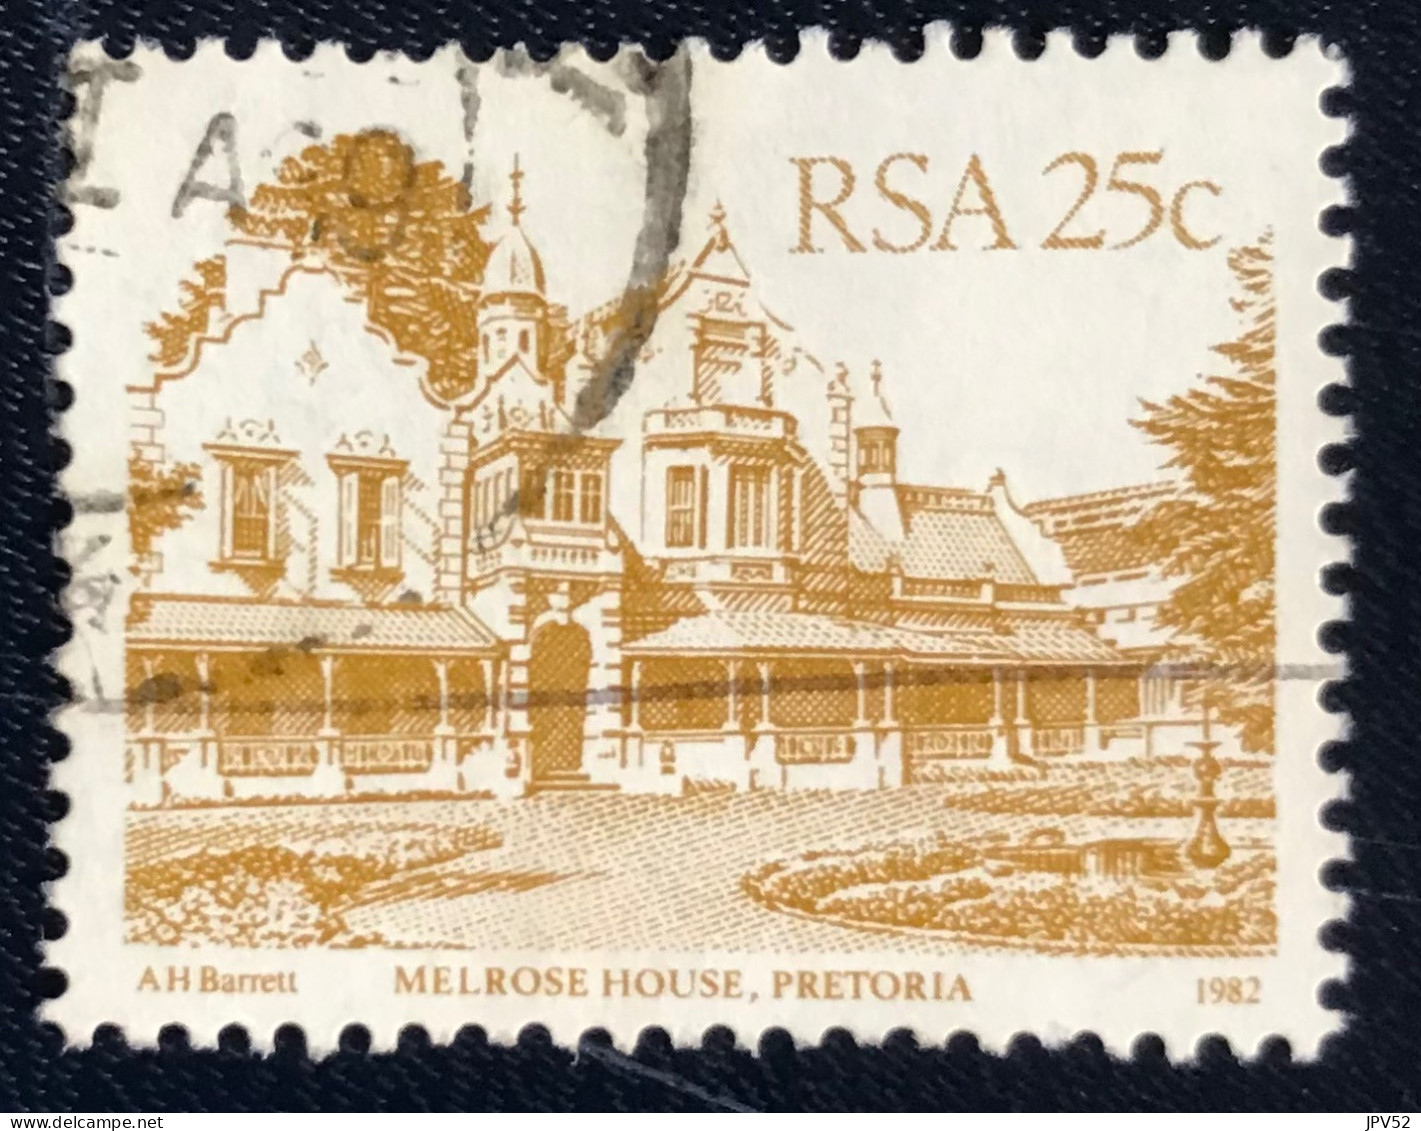 RSA - South Africa - Suid-Afrika - C18/9 - 1982 - (°)used - Michel 613 - Gebouwen - Melrose House - Gebruikt